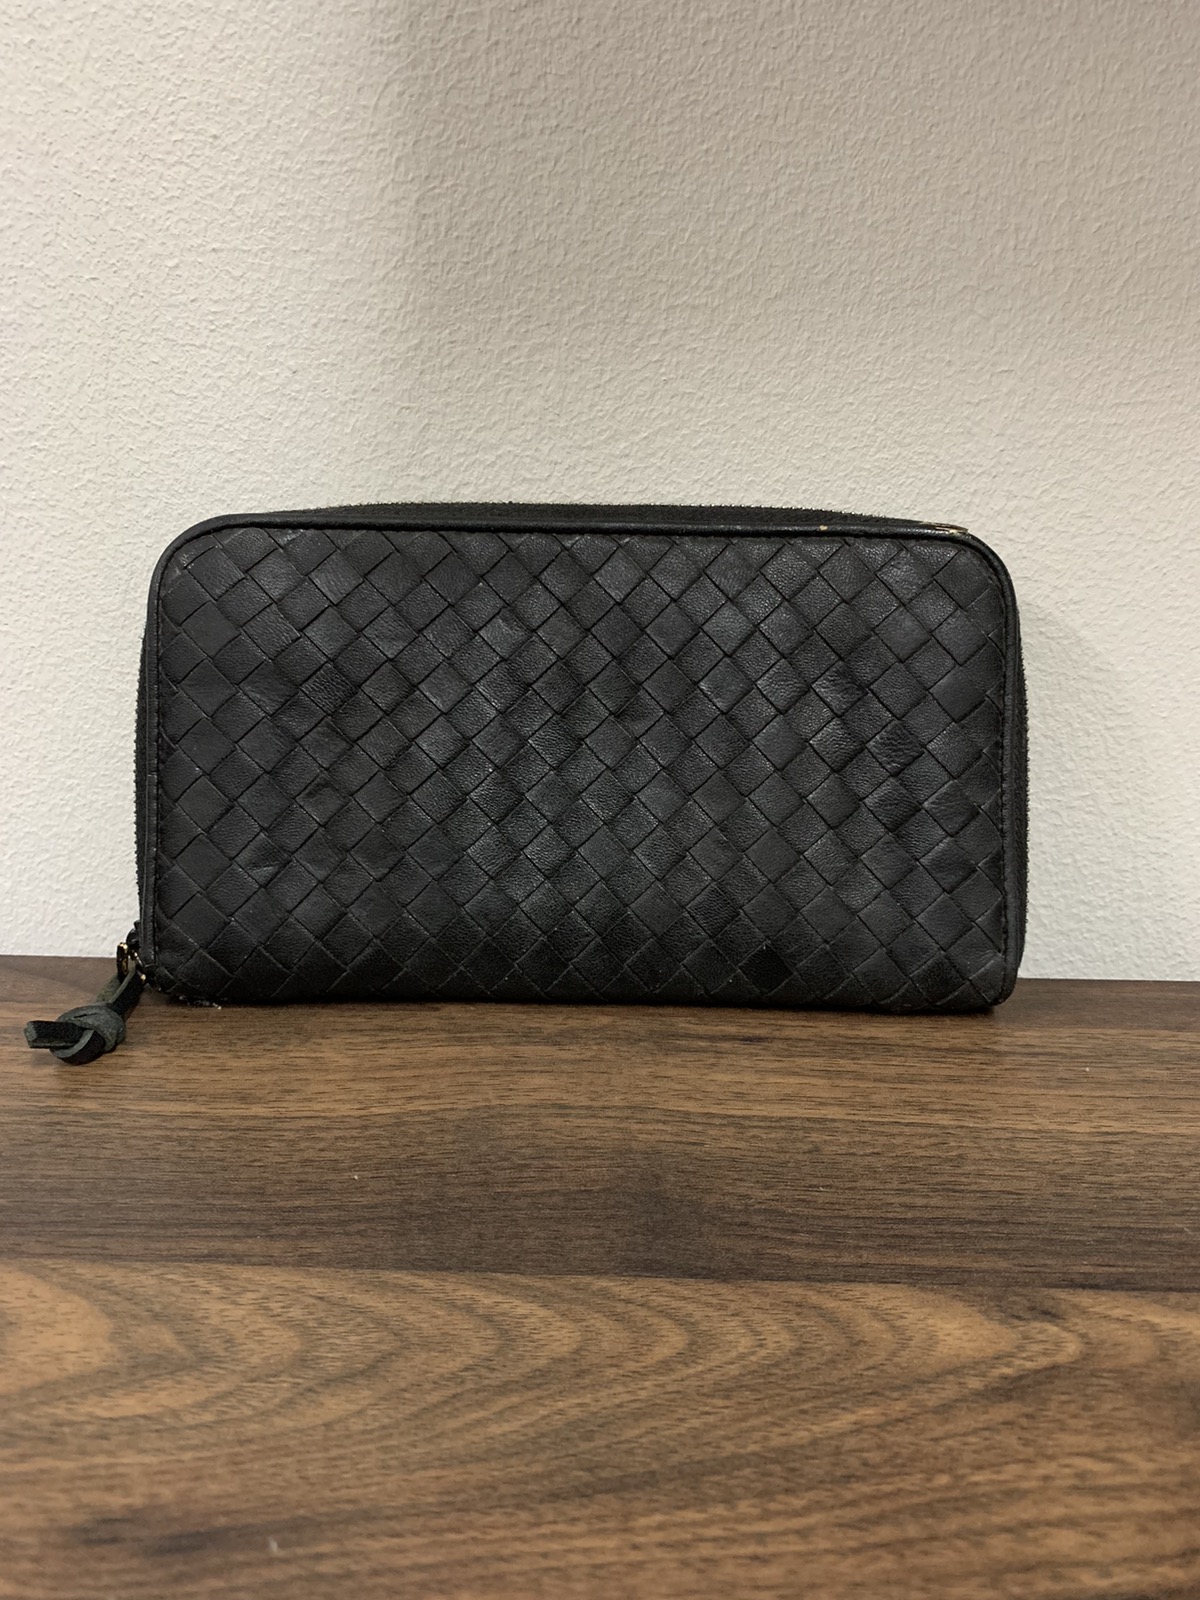 Bottega Veneta Black Leather Long Wallet Purse Unisex Wallet - 2